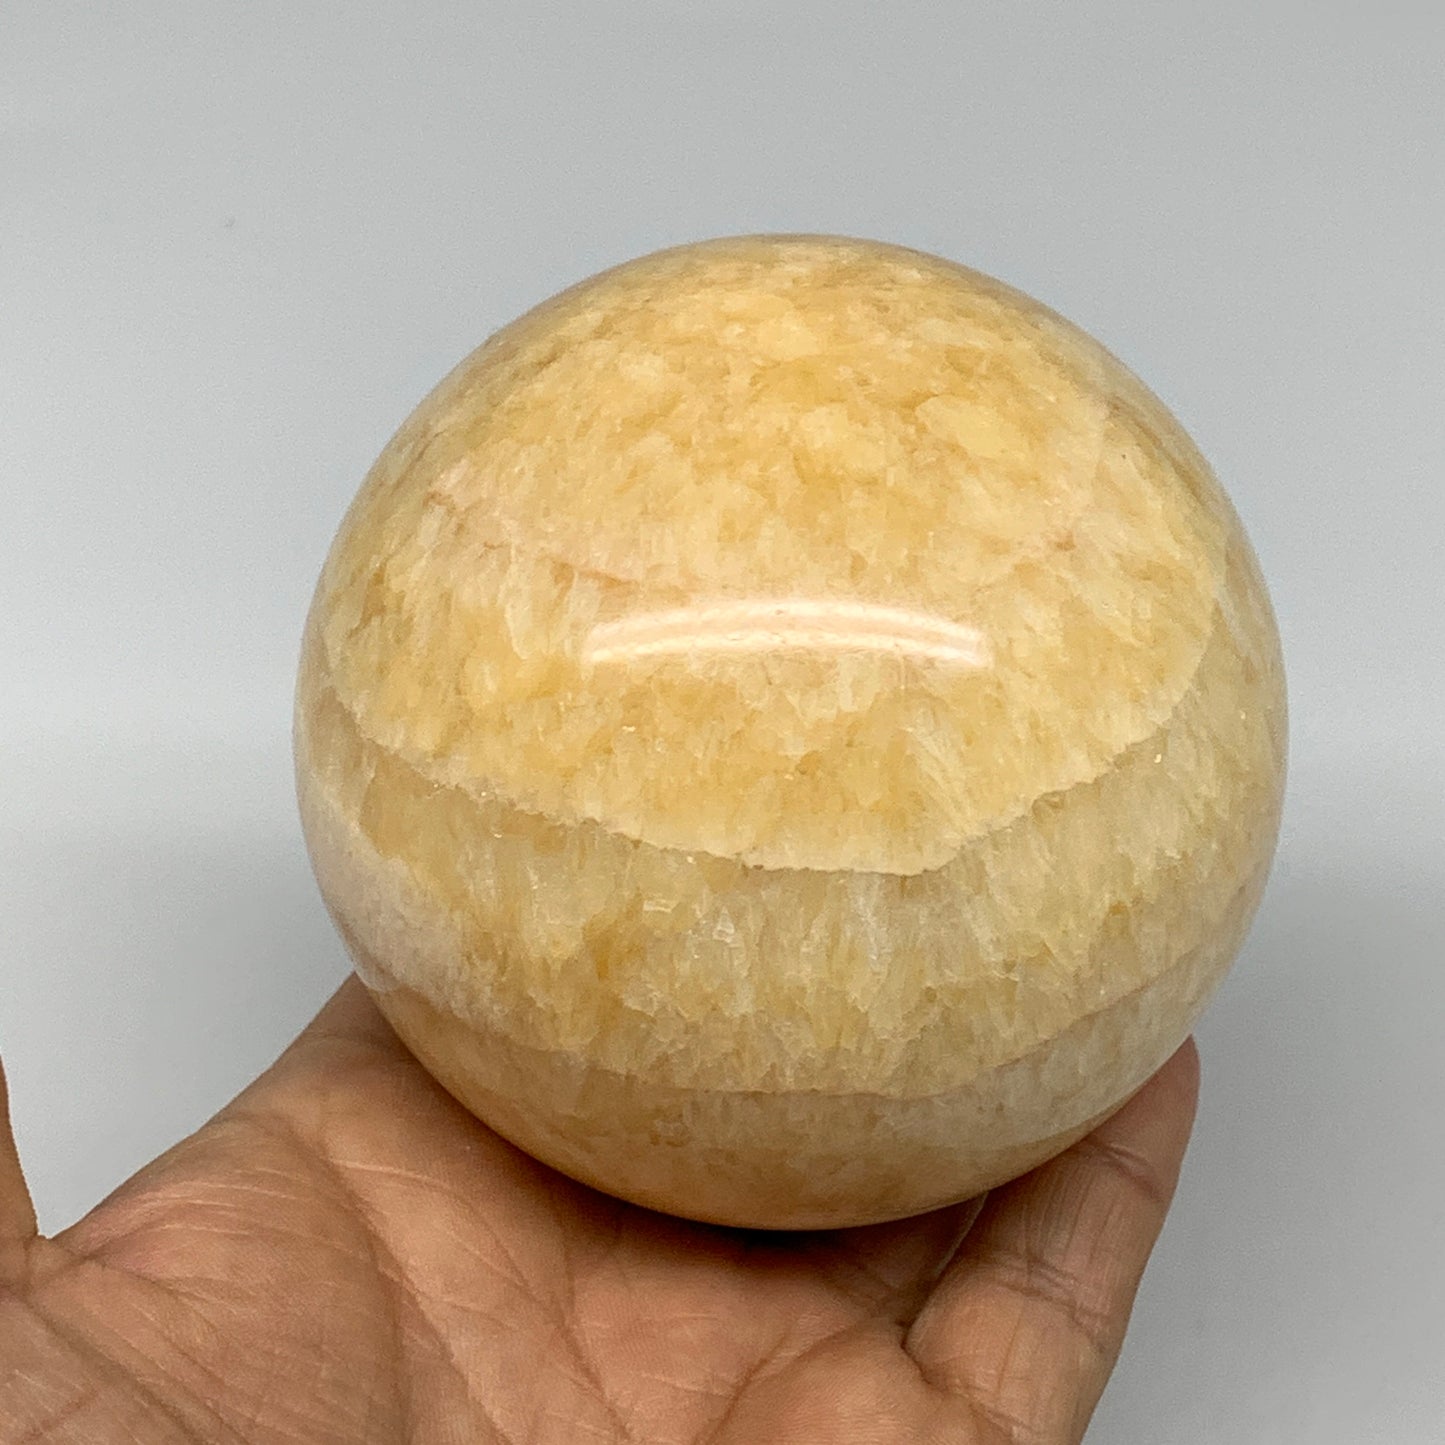 1.75 lbs,3.2"(82mm) Yellow Calcite Sphere Gemstone,Healing Crystal, B25373